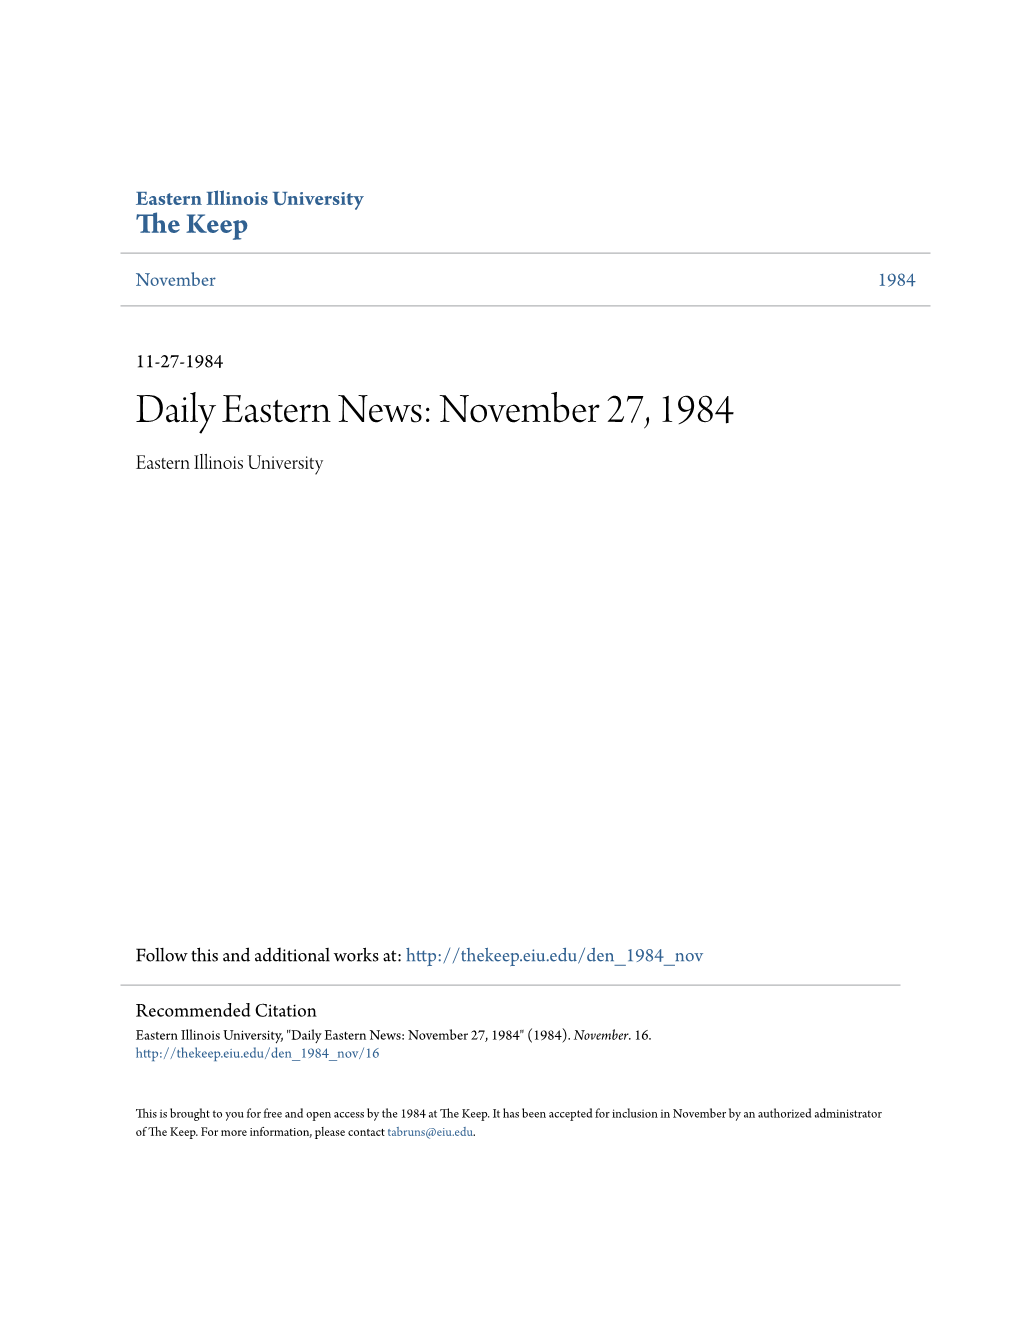 November 27, 1984 Eastern Illinois University